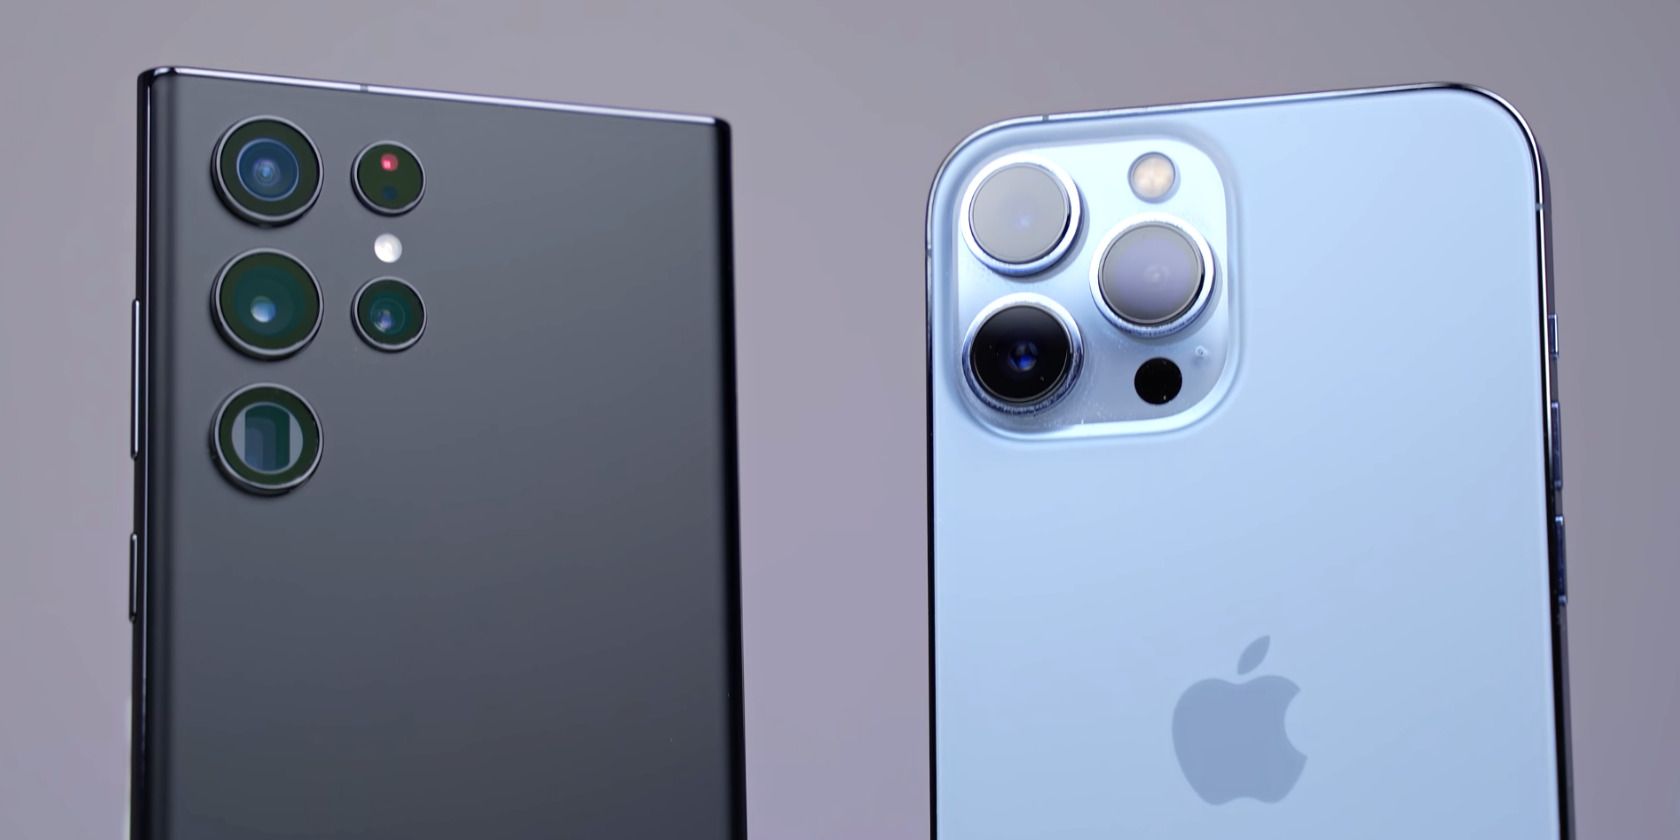 Appareil photo Samsung Galaxy S22 Ultra et appareil photo iPhone 13 Pro Max côte à côte